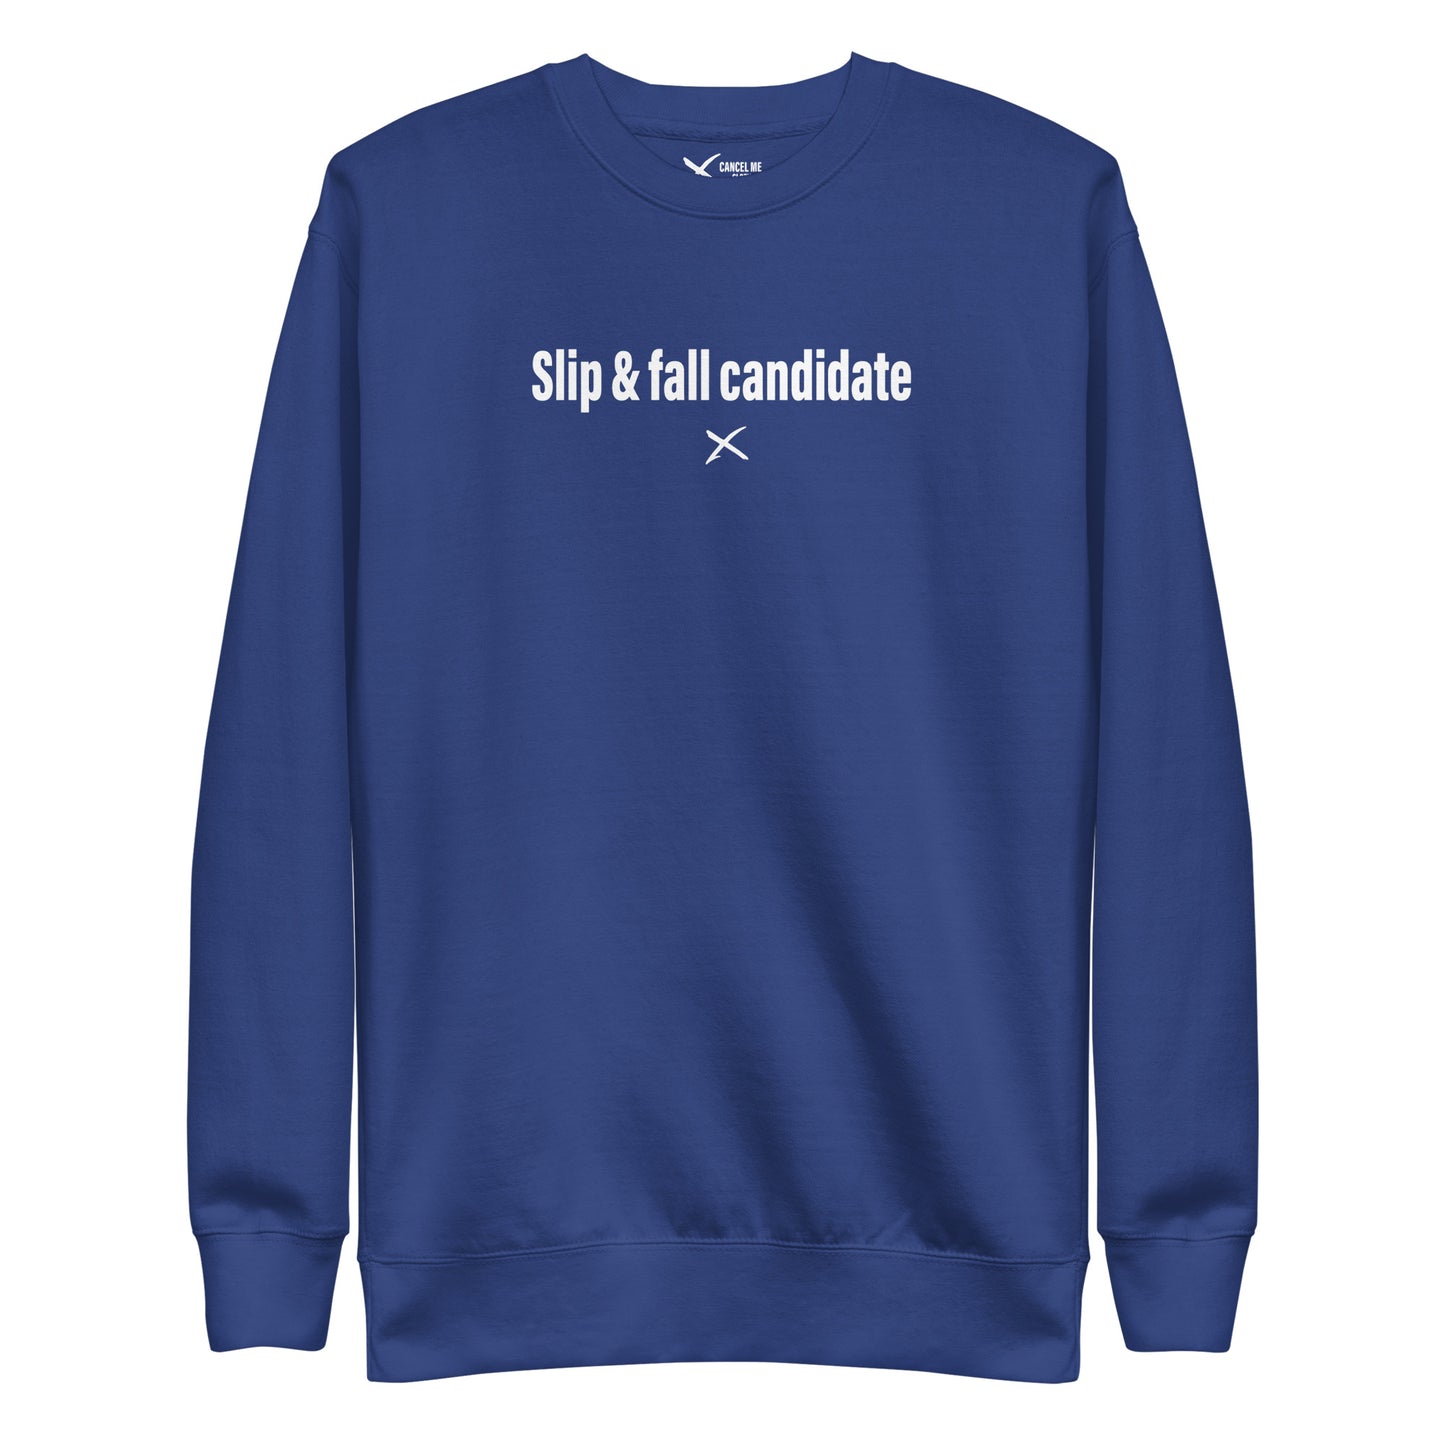 Slip & fall candidate - Sweatshirt